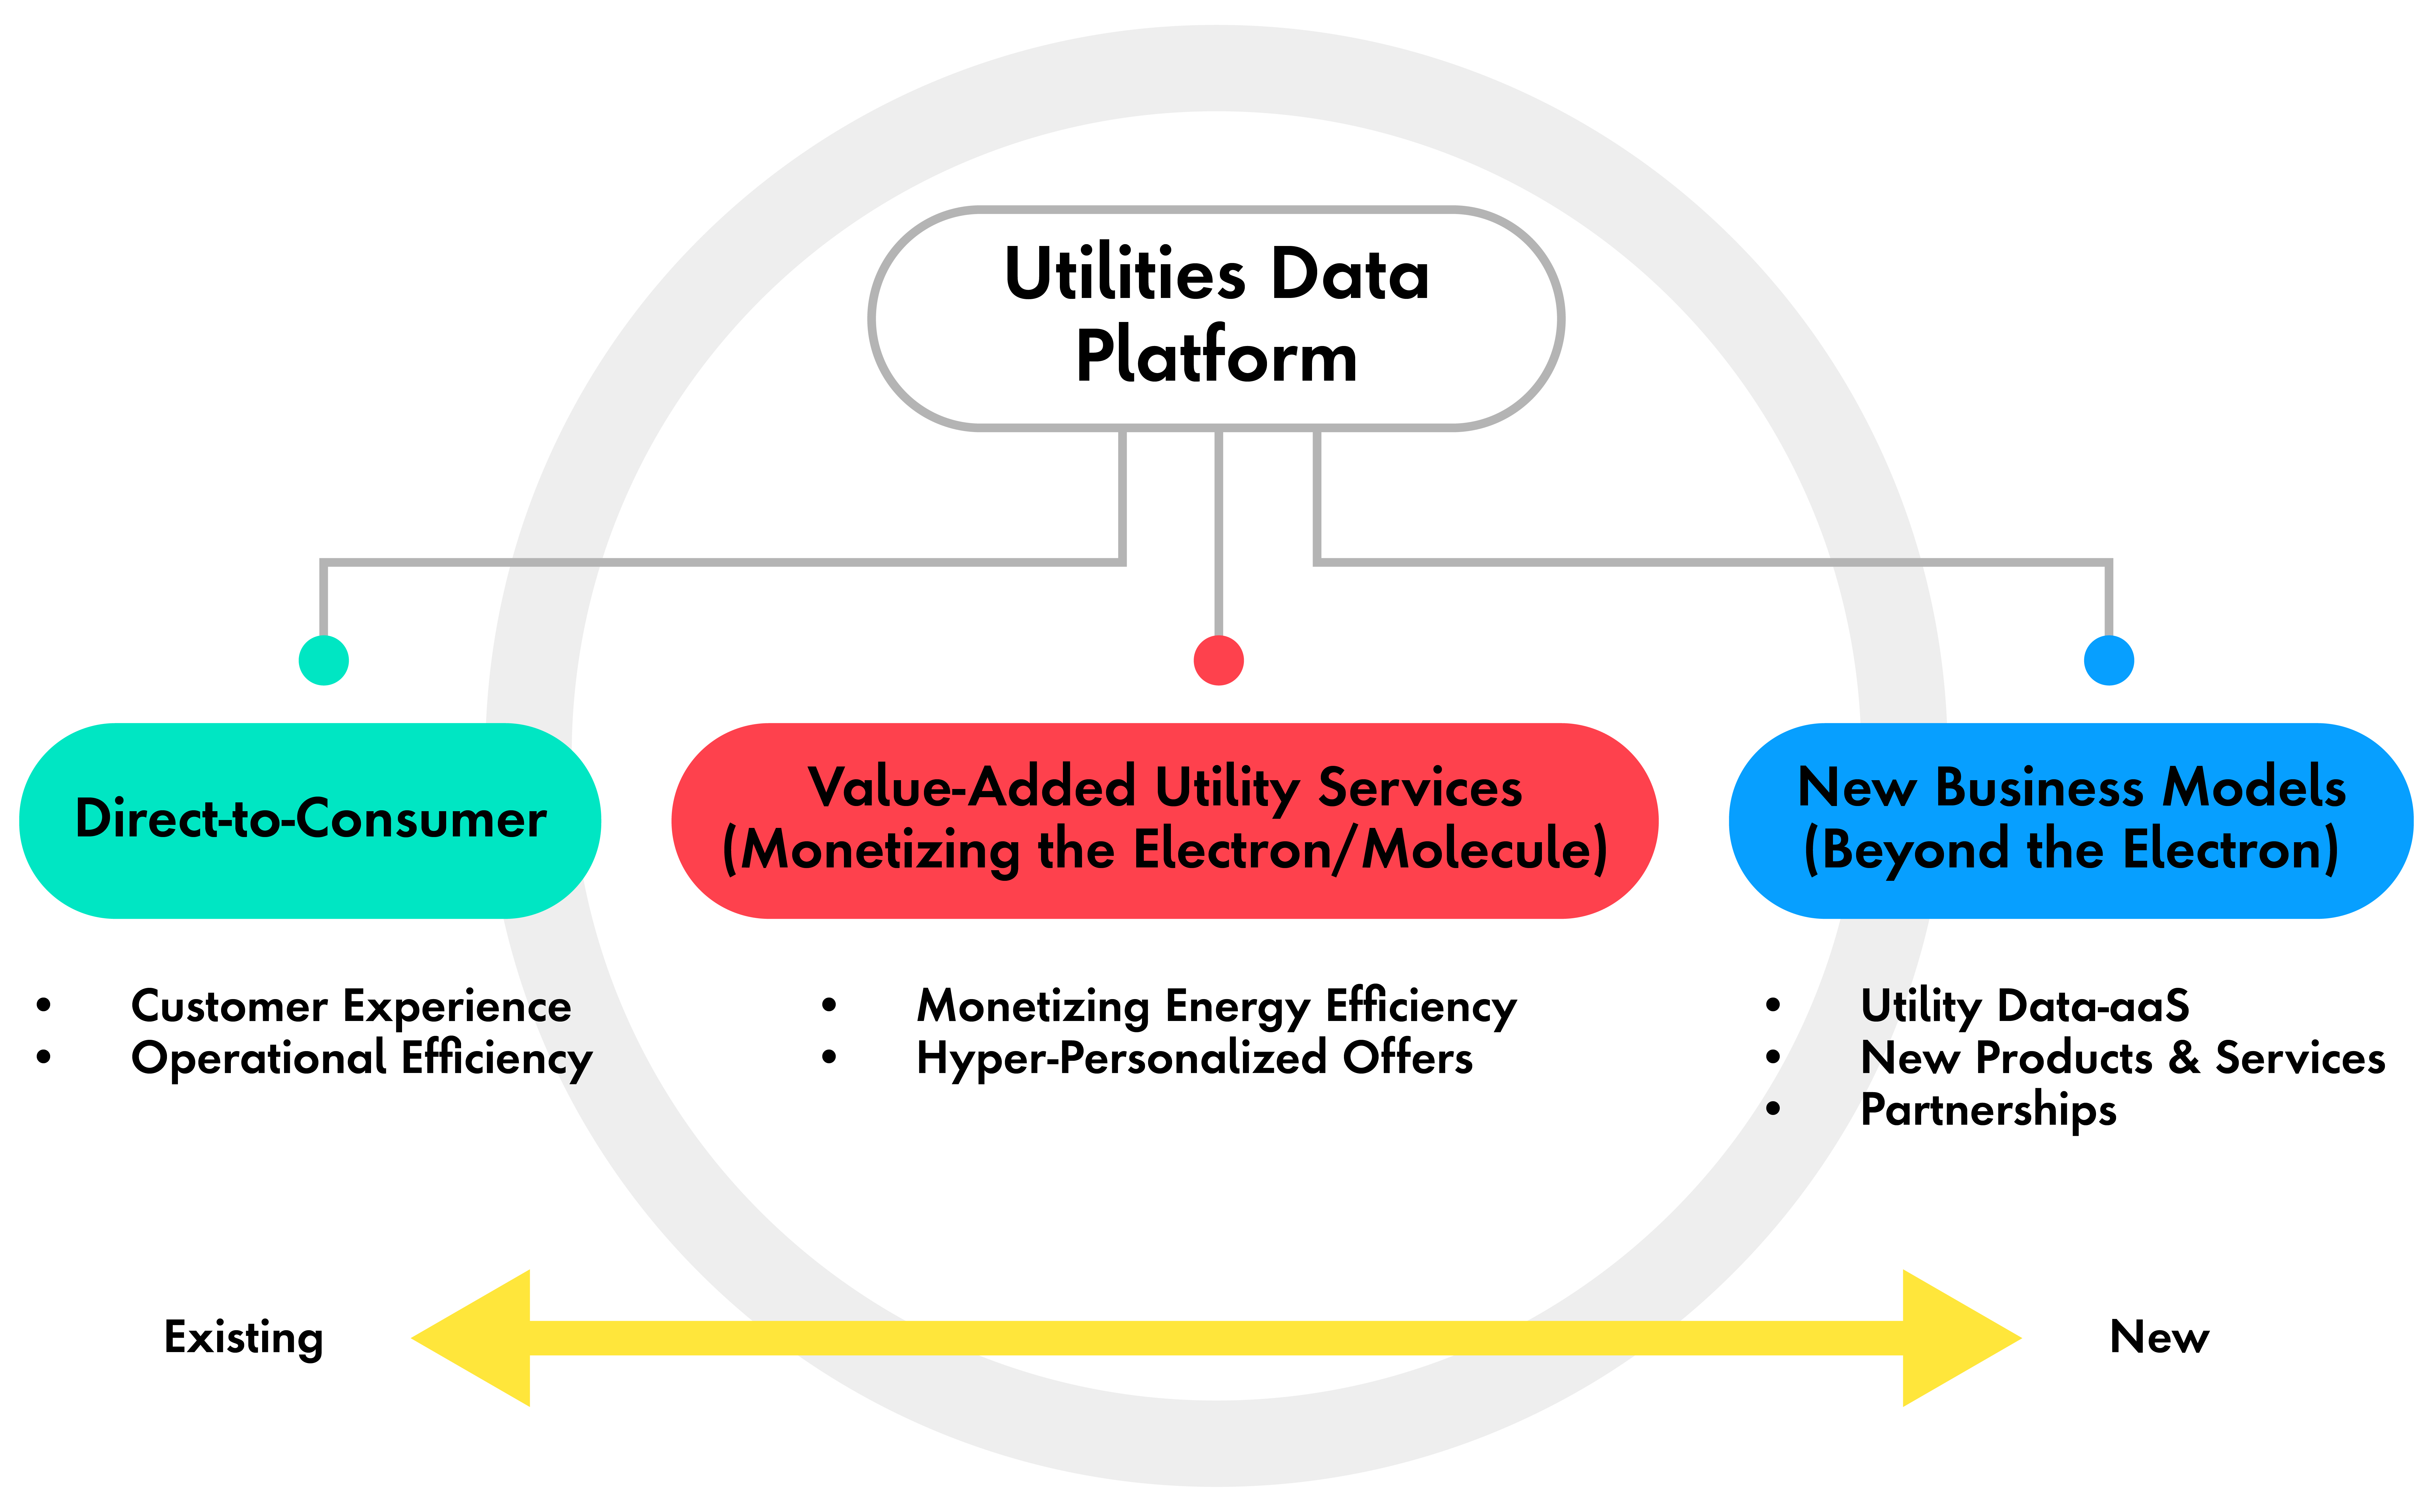 utilities data platform enables customer service, monetization and new models